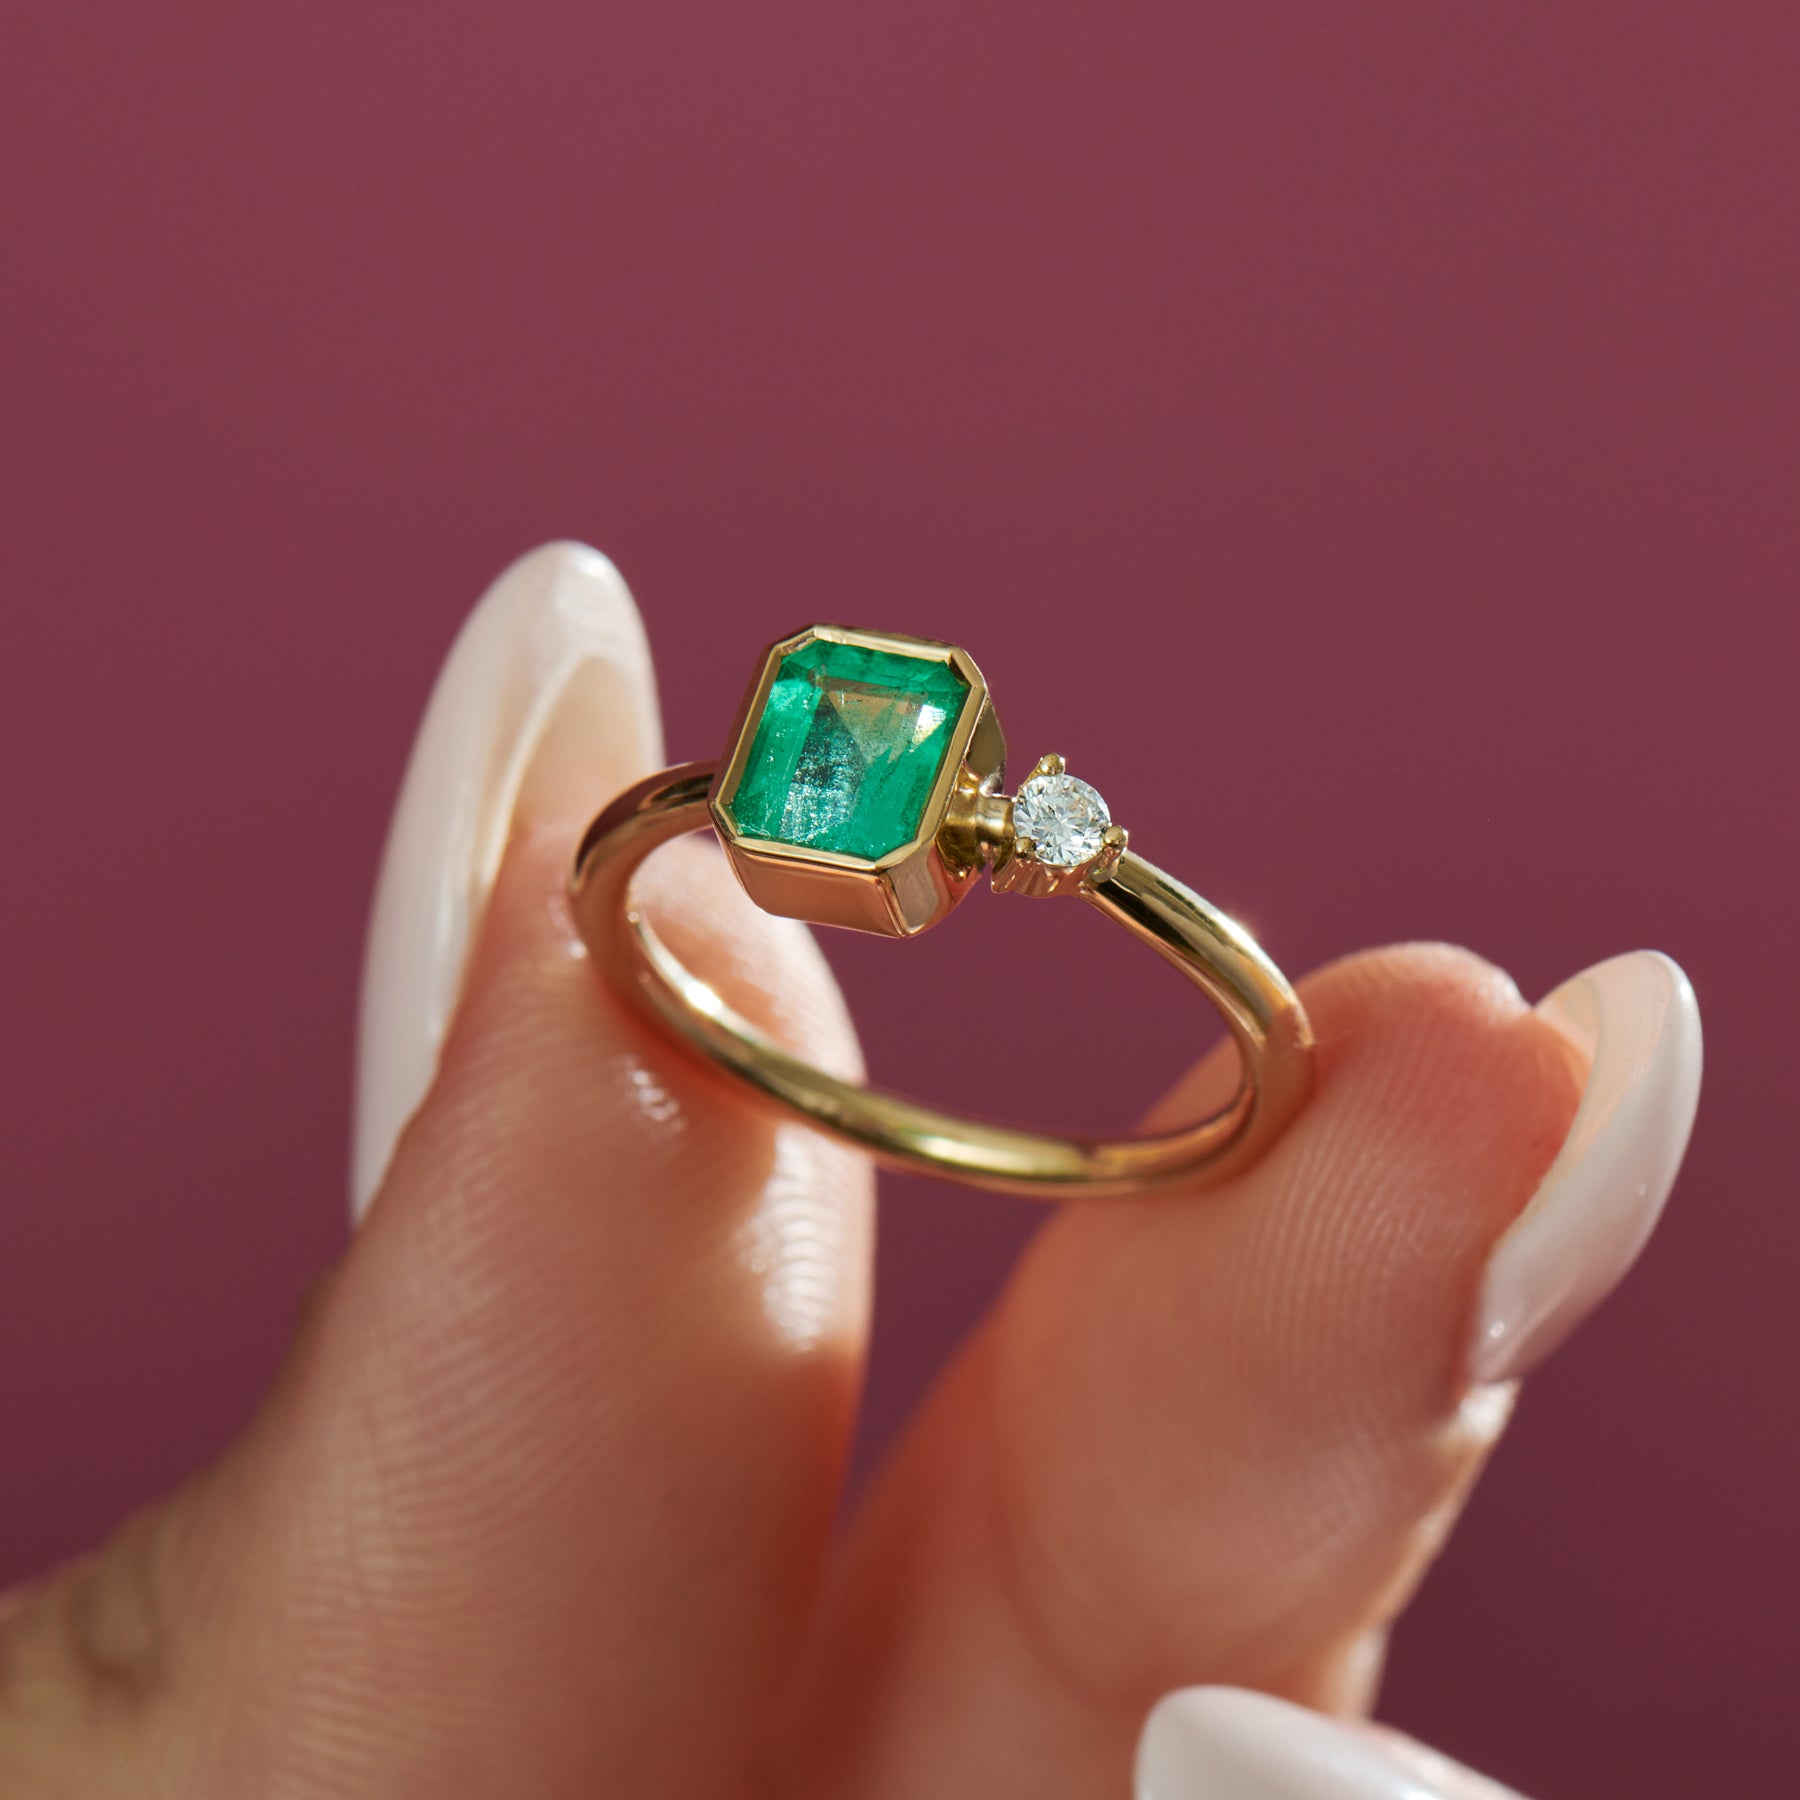 Beautiful Emerald Ring w/ Diamond Accents 14K White Gold